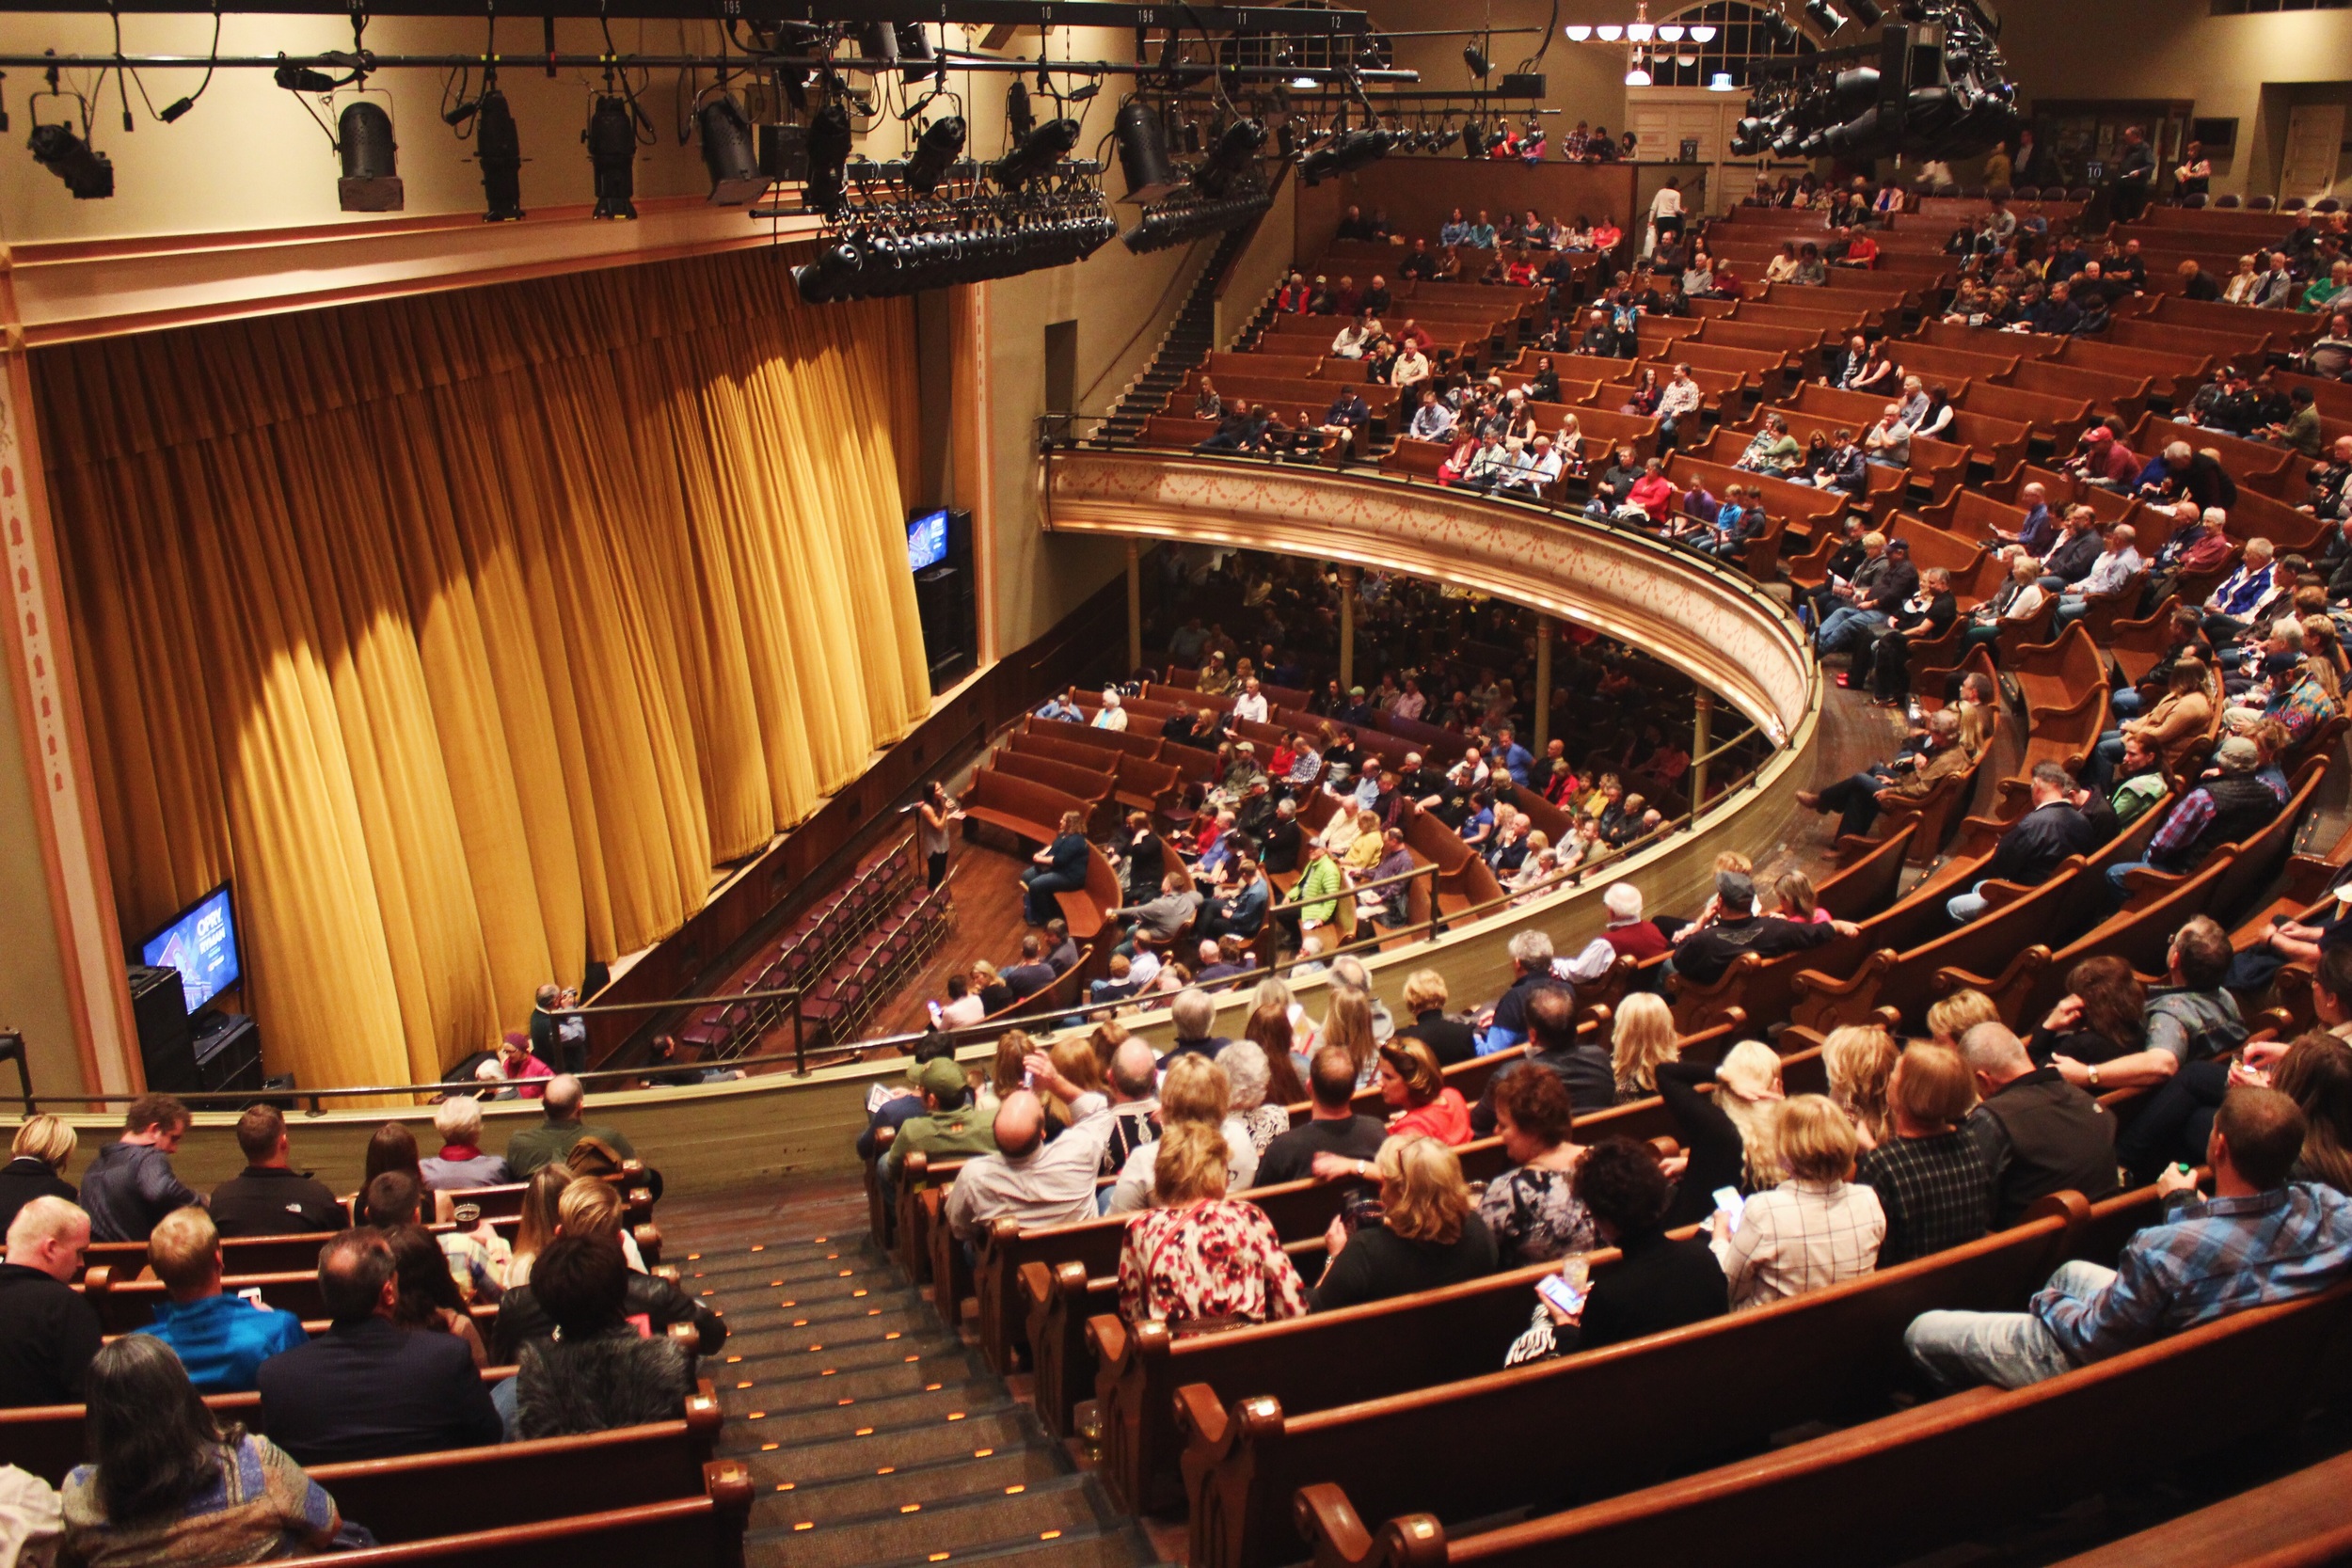 Nashville Ryman Auditorium Seating Chart